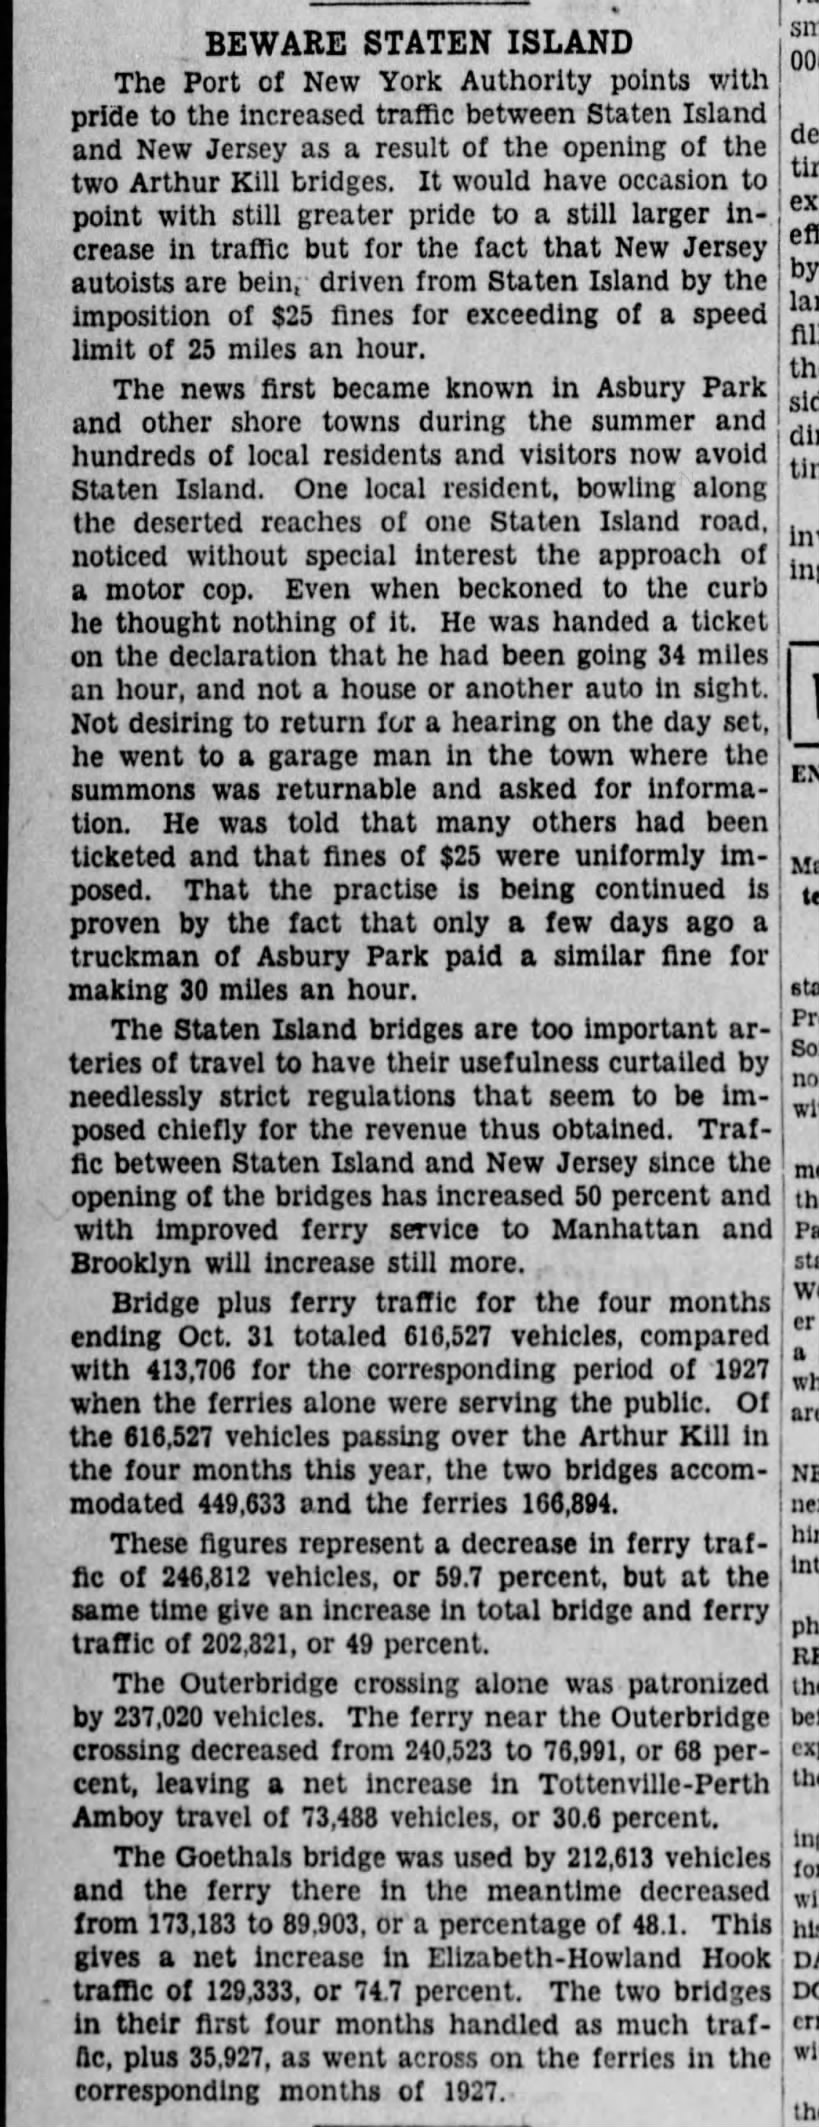 Staten Island crossings, November 22, 1928